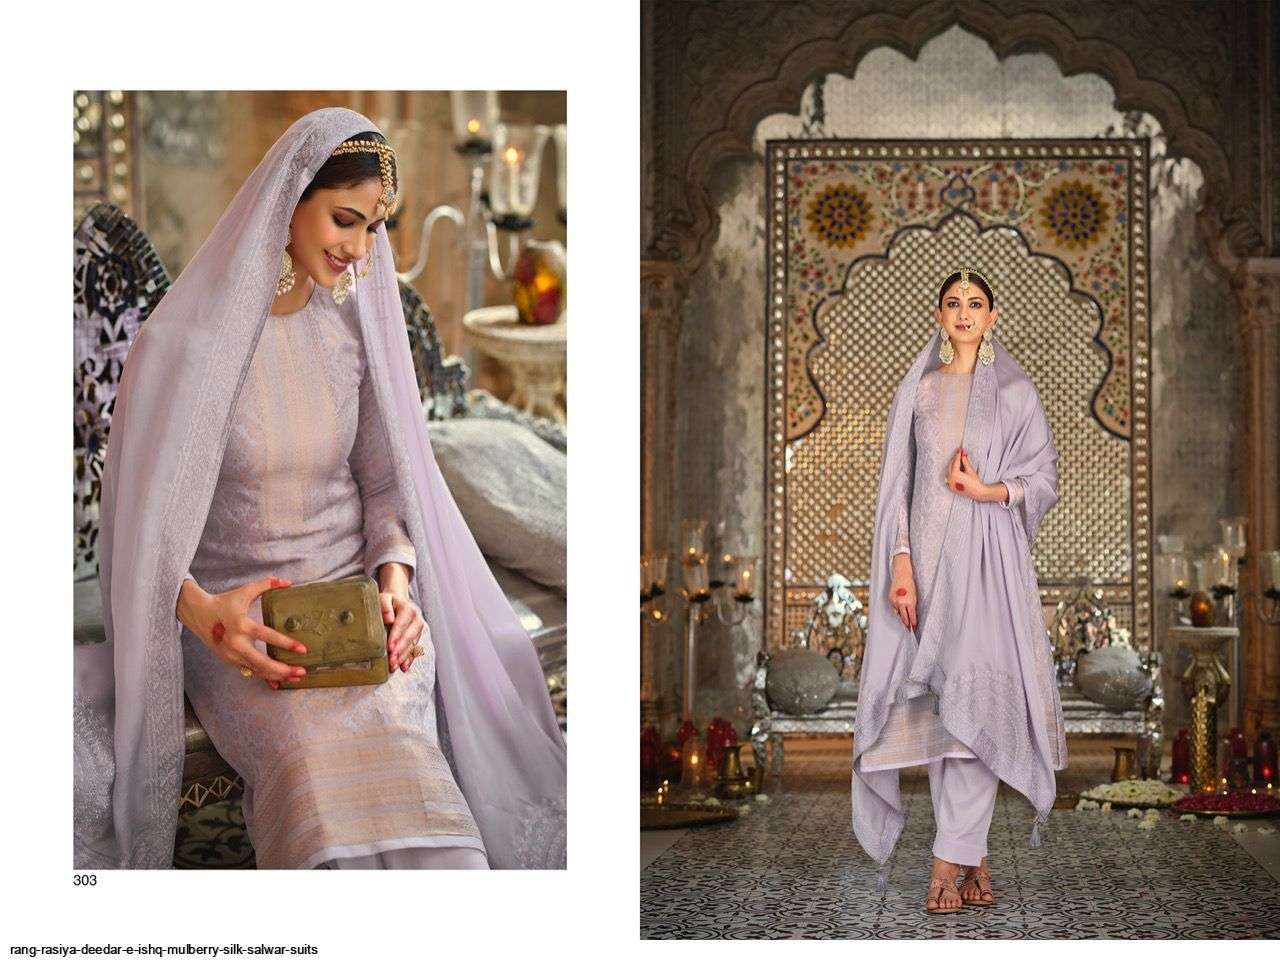 rang rasiya deedar e ishq 301-308 series mulbeery silk designer exclusive suits online wholesaler surat